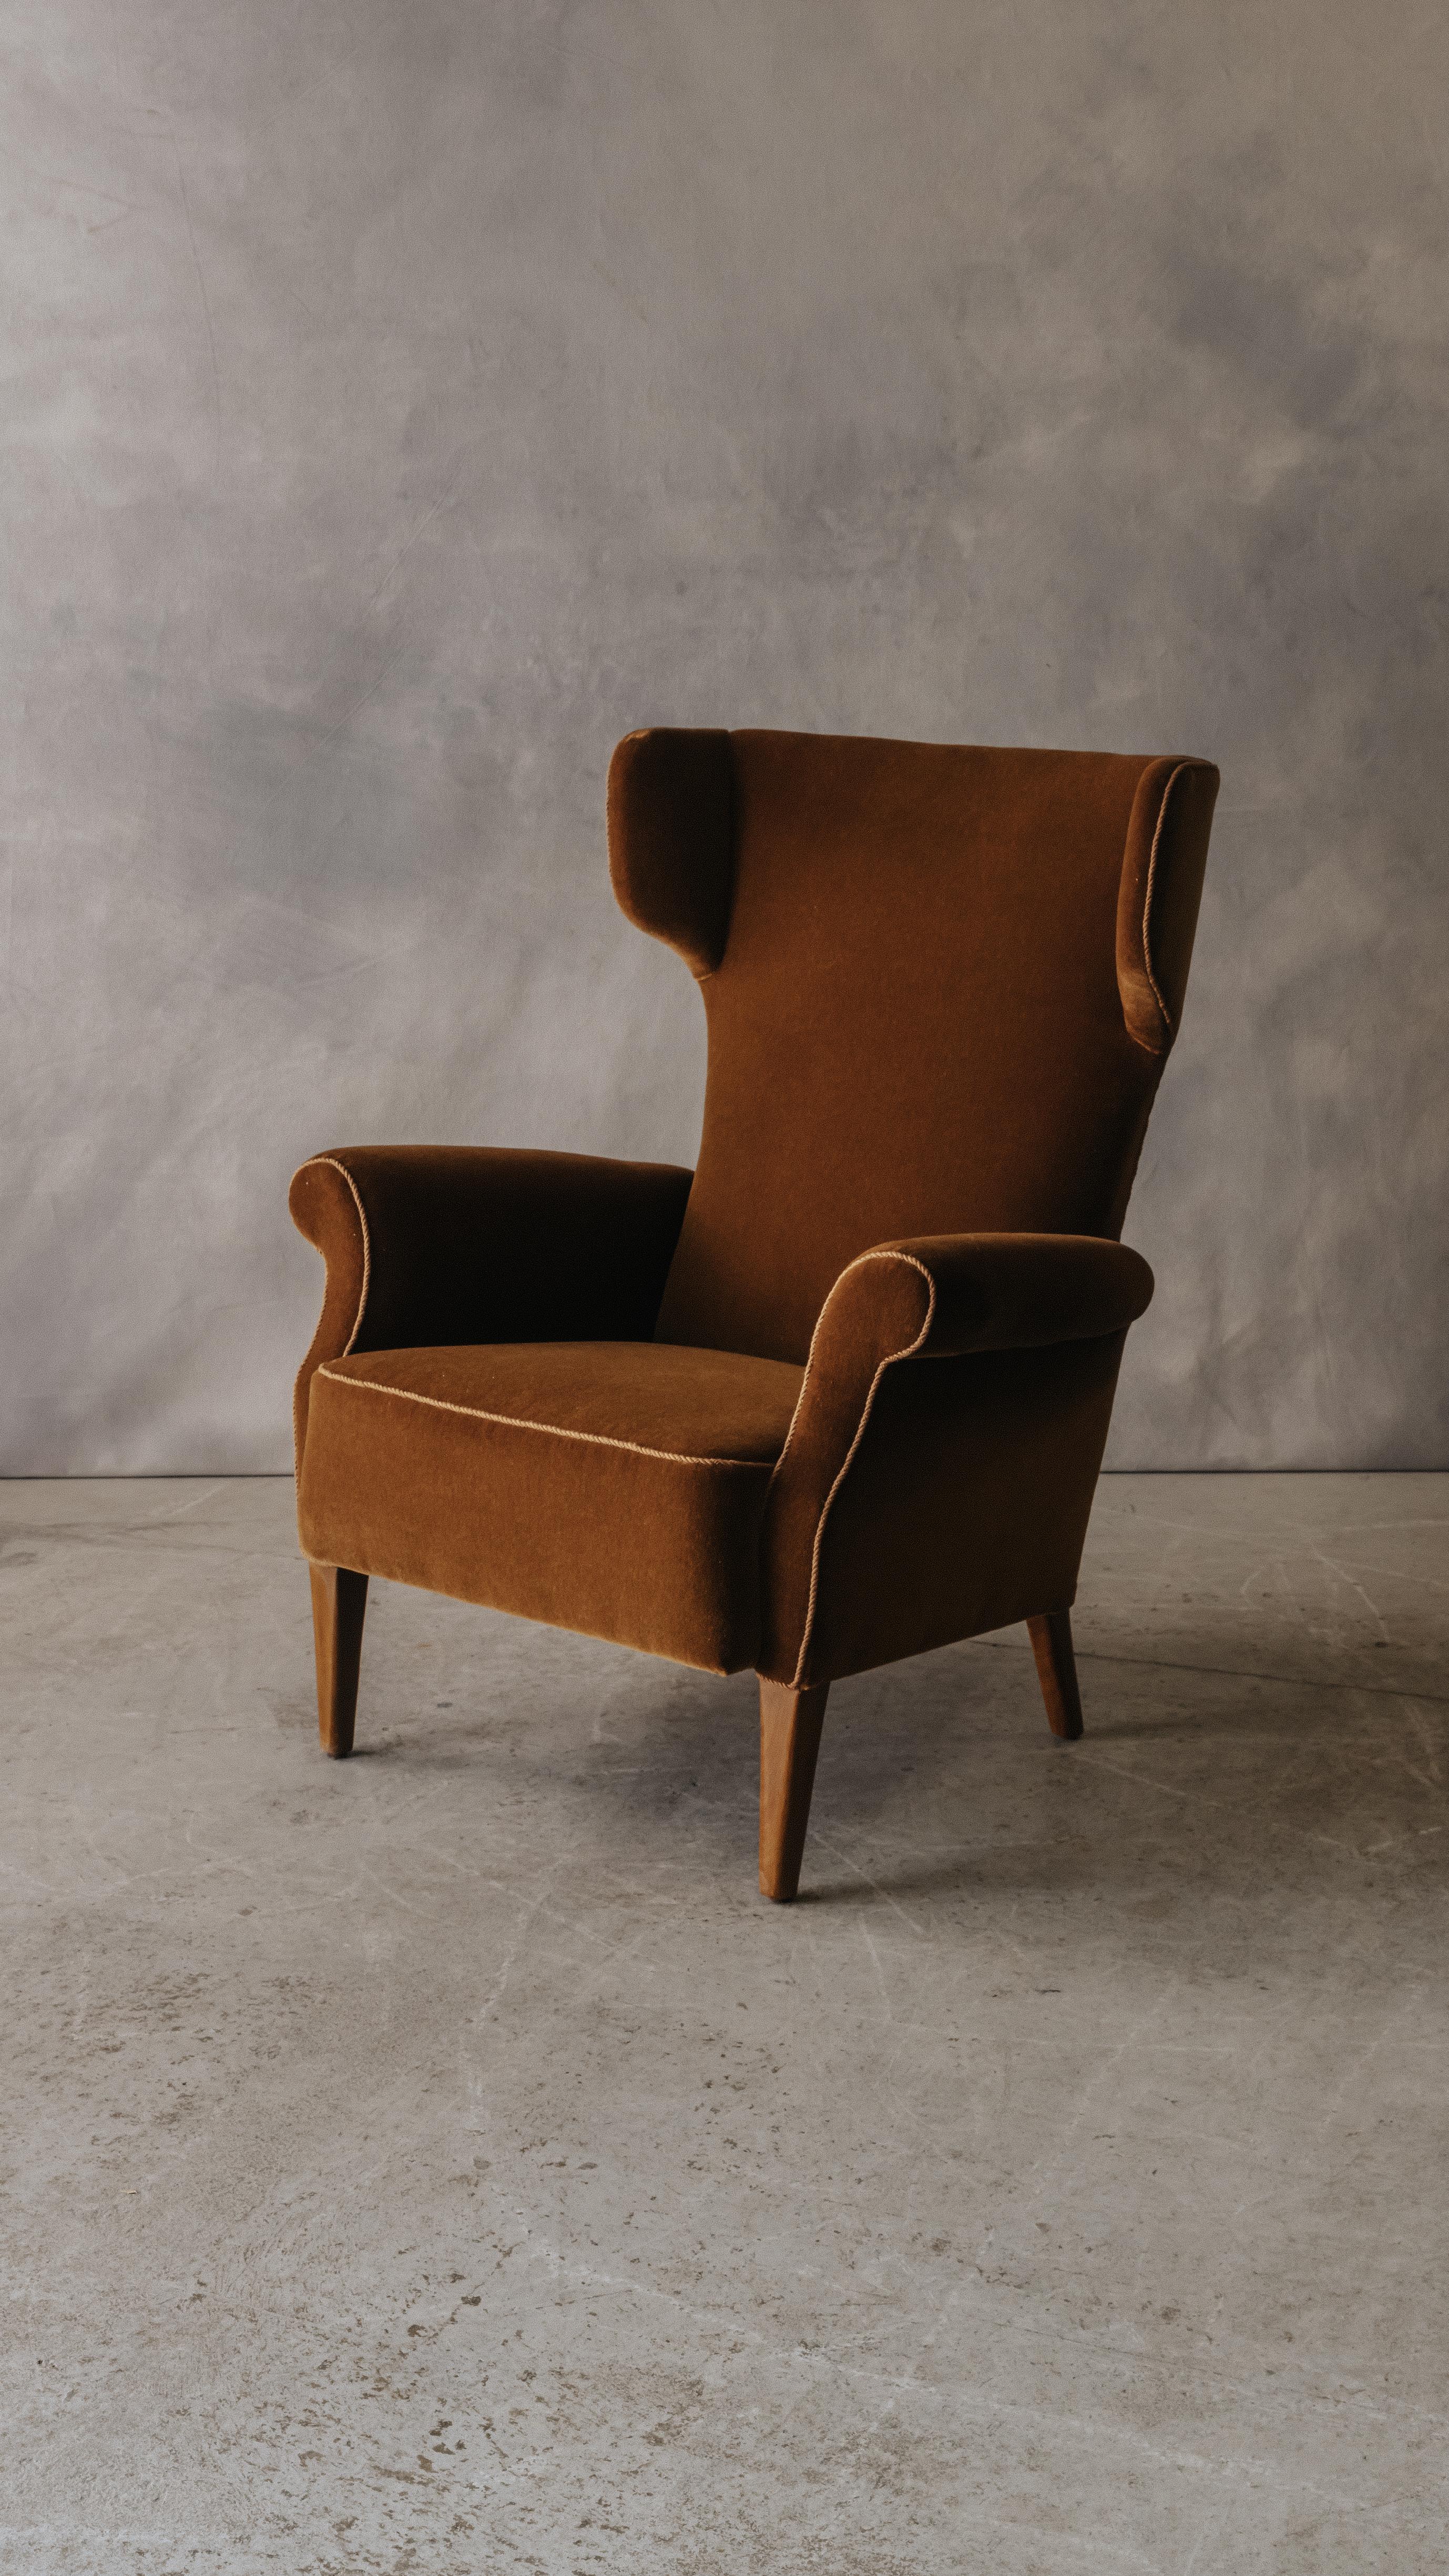 Vintage Fritz Hansen Lounge Chair From Denmark, Circa 1950.  Nice wingback model, later upholstered in a copper colored velvet mohair.